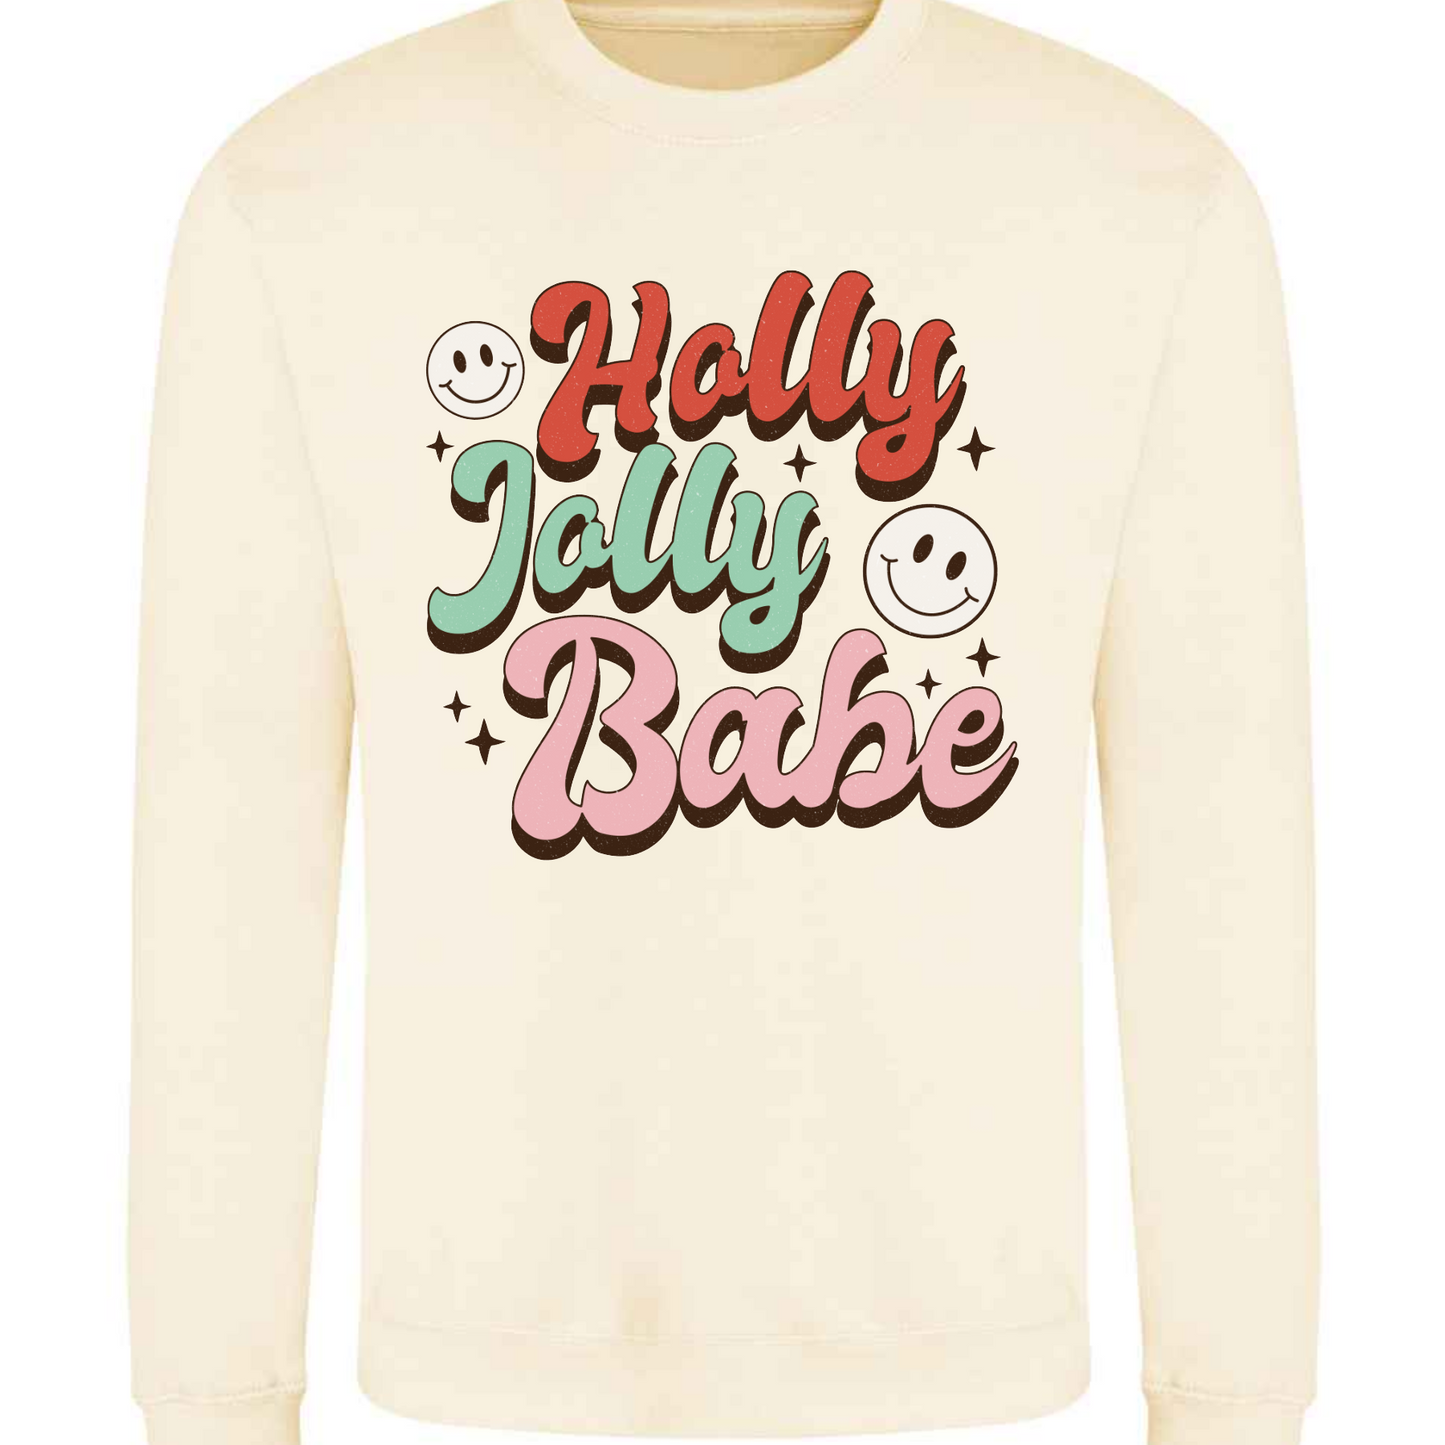 *Holly Jolly Babe* Retro Christmas Sweatshirt Jumper